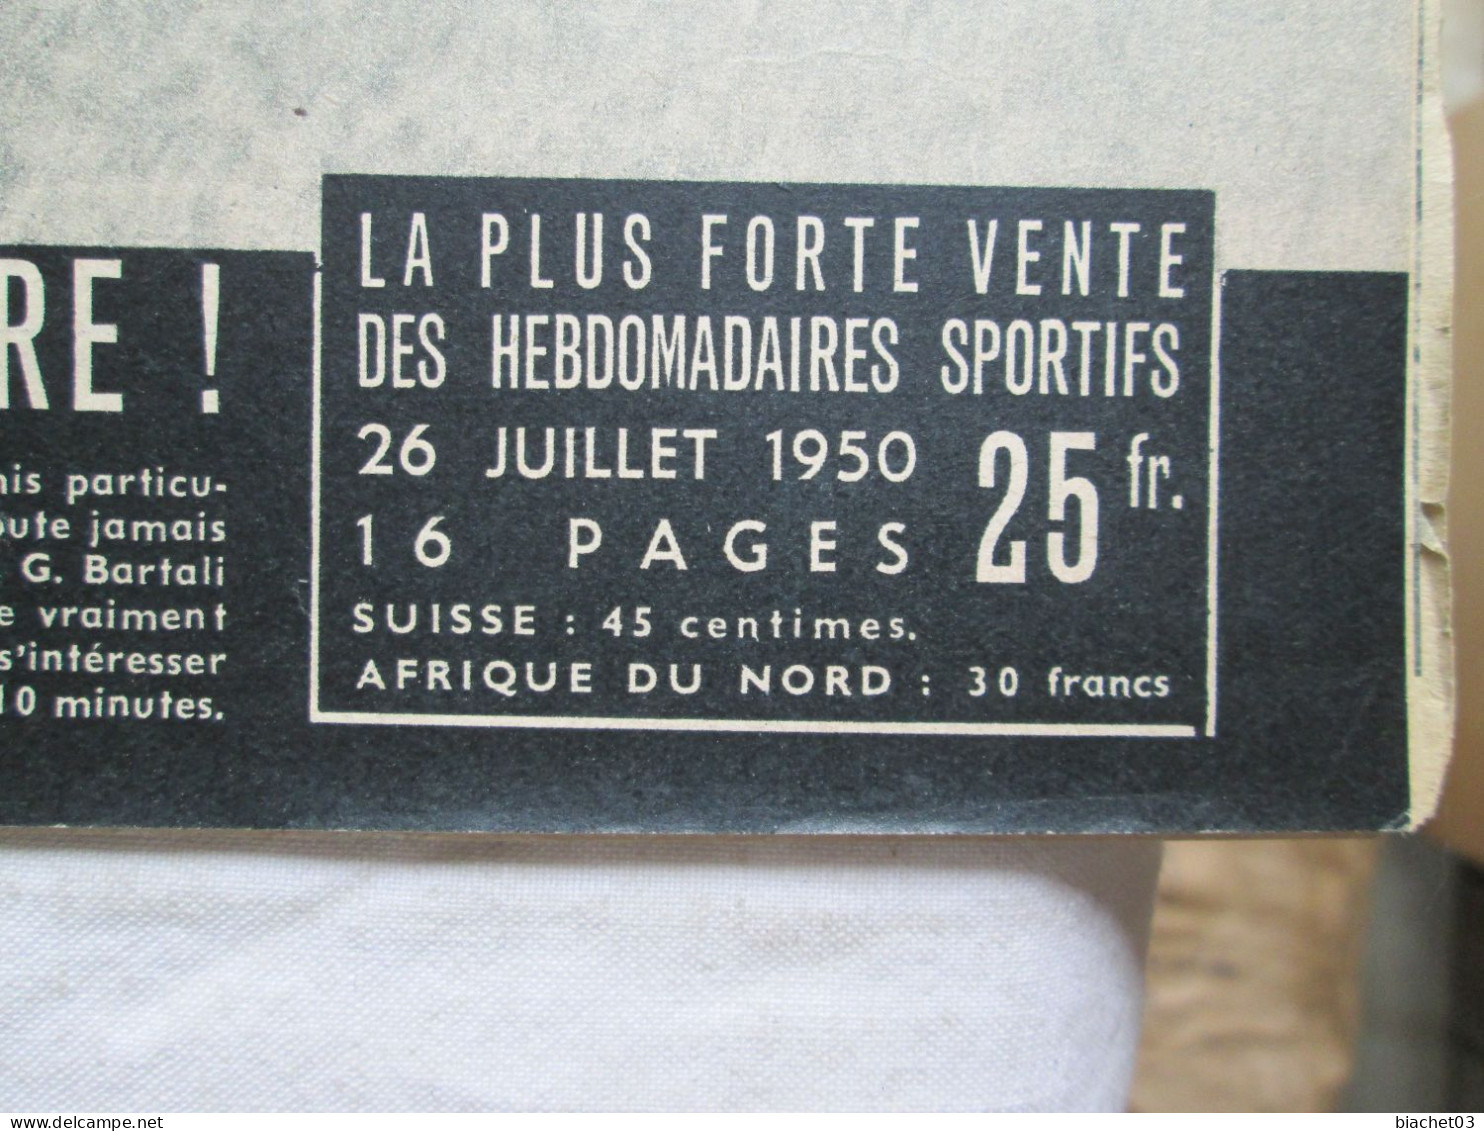 miroir sprint lot de 55 n° de 1950